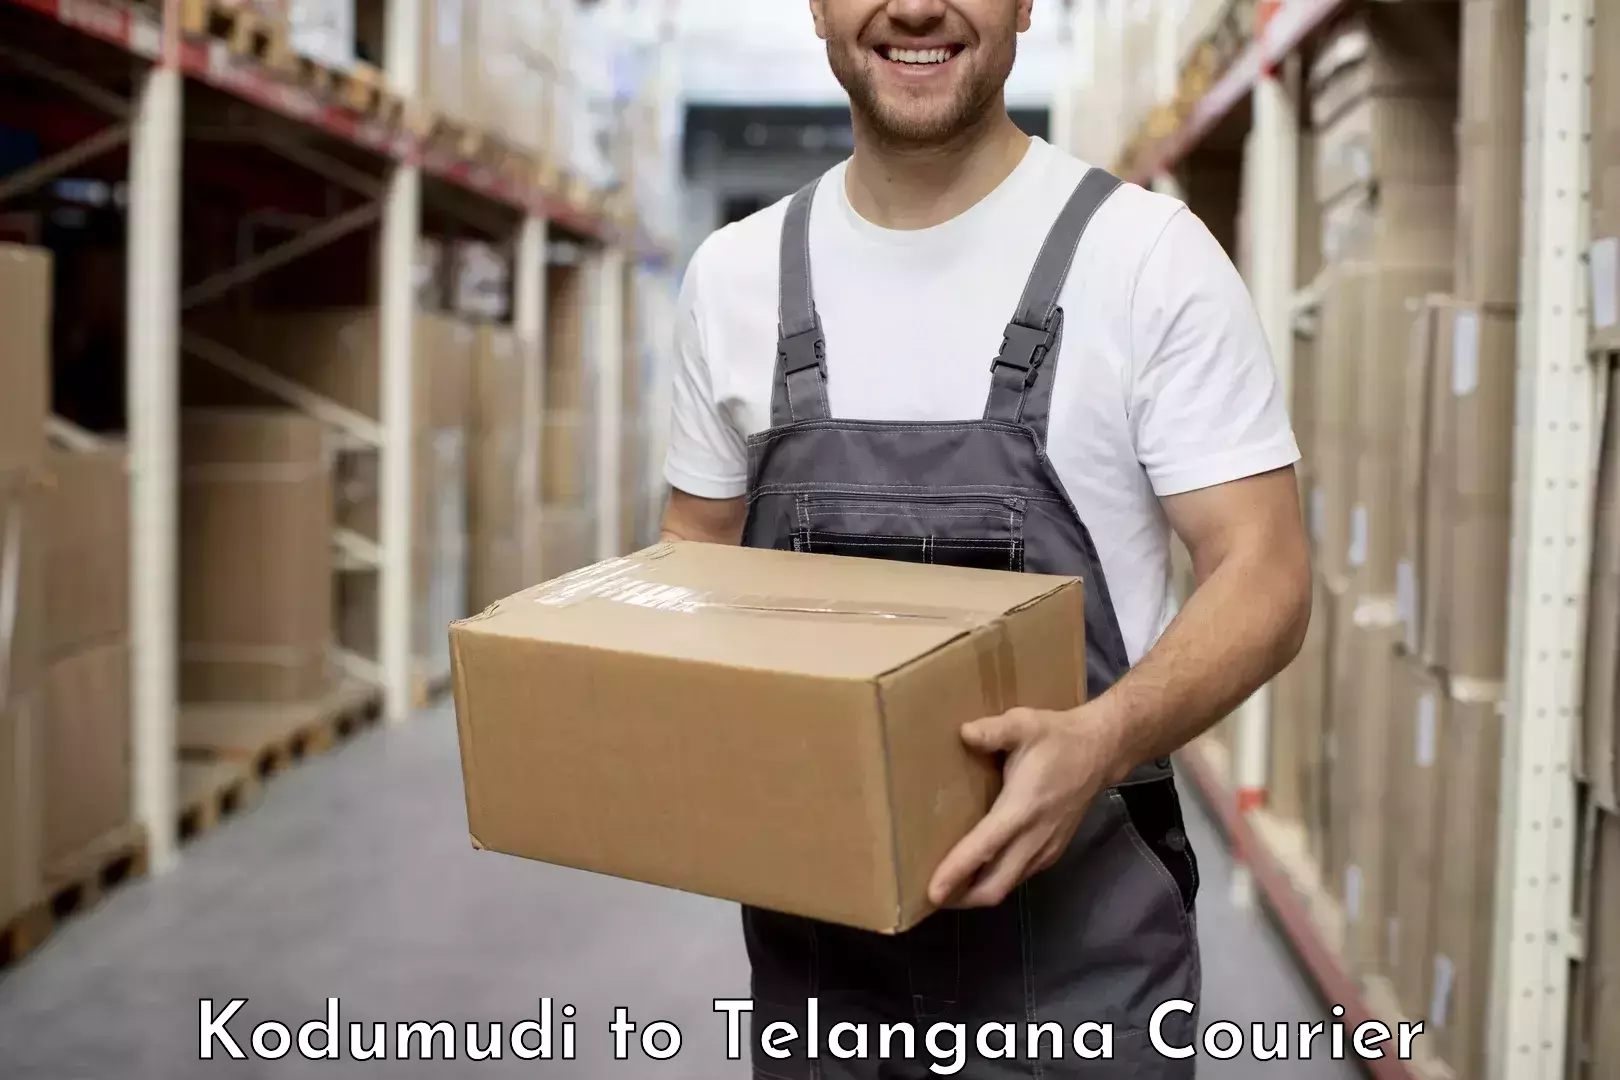 Courier service partnerships in Kodumudi to Manuguru